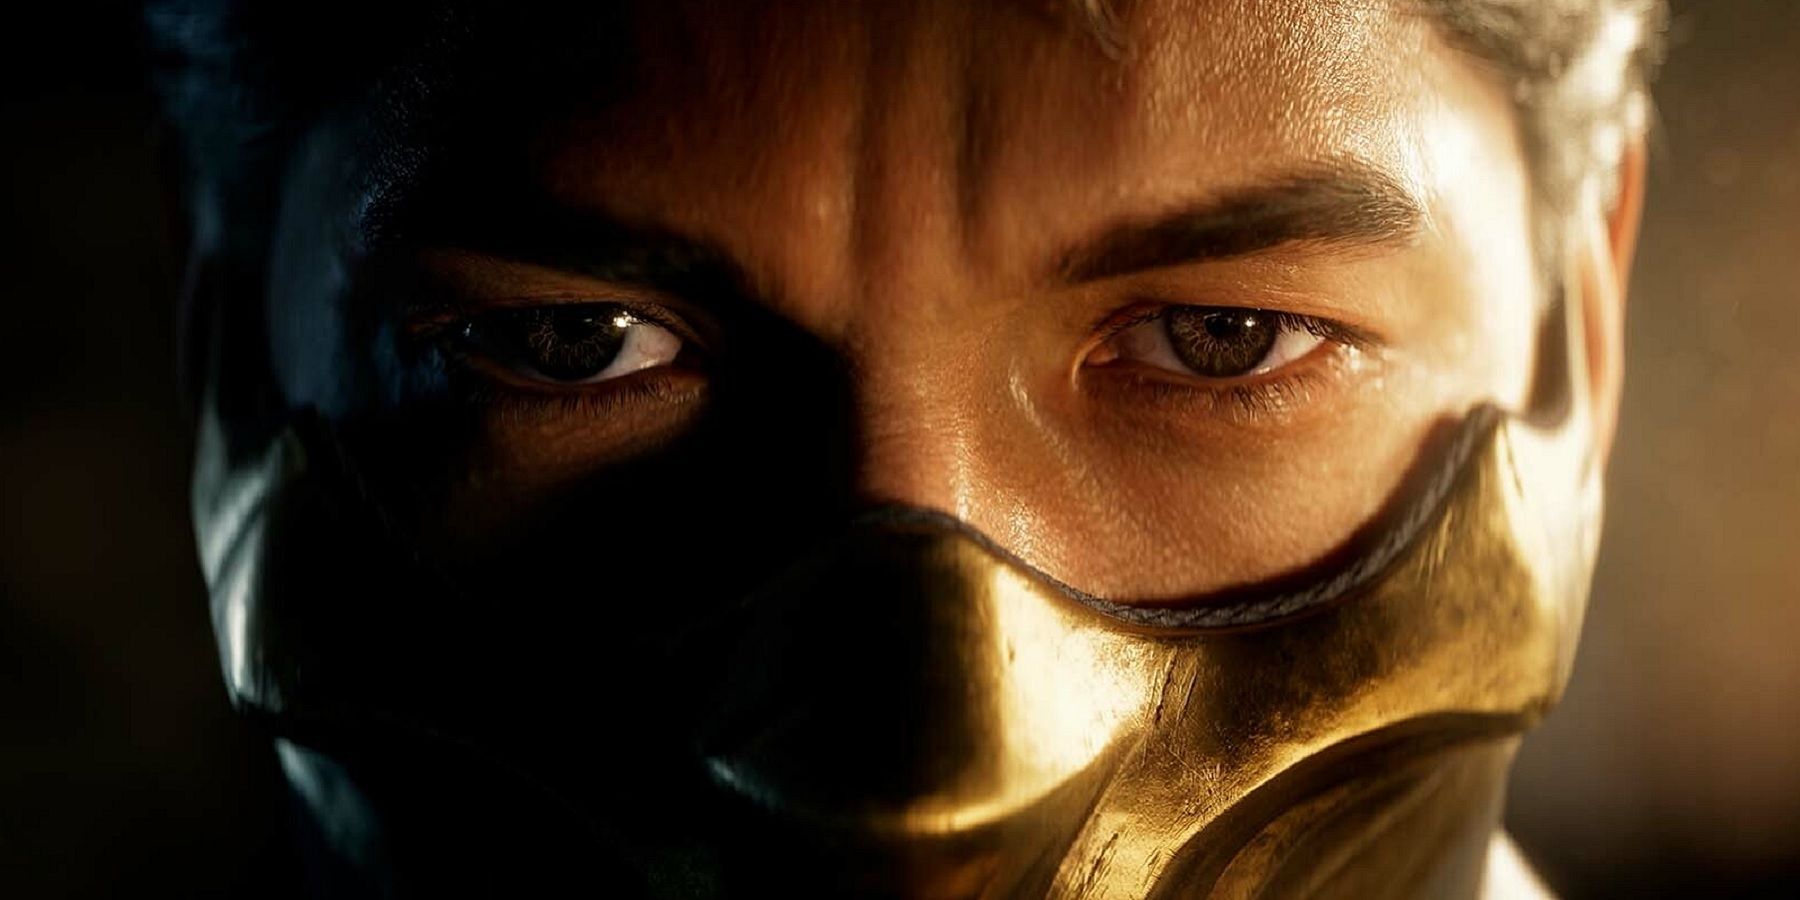 Mortal Kombat 1 DLC Kombat Pack characters leaked by